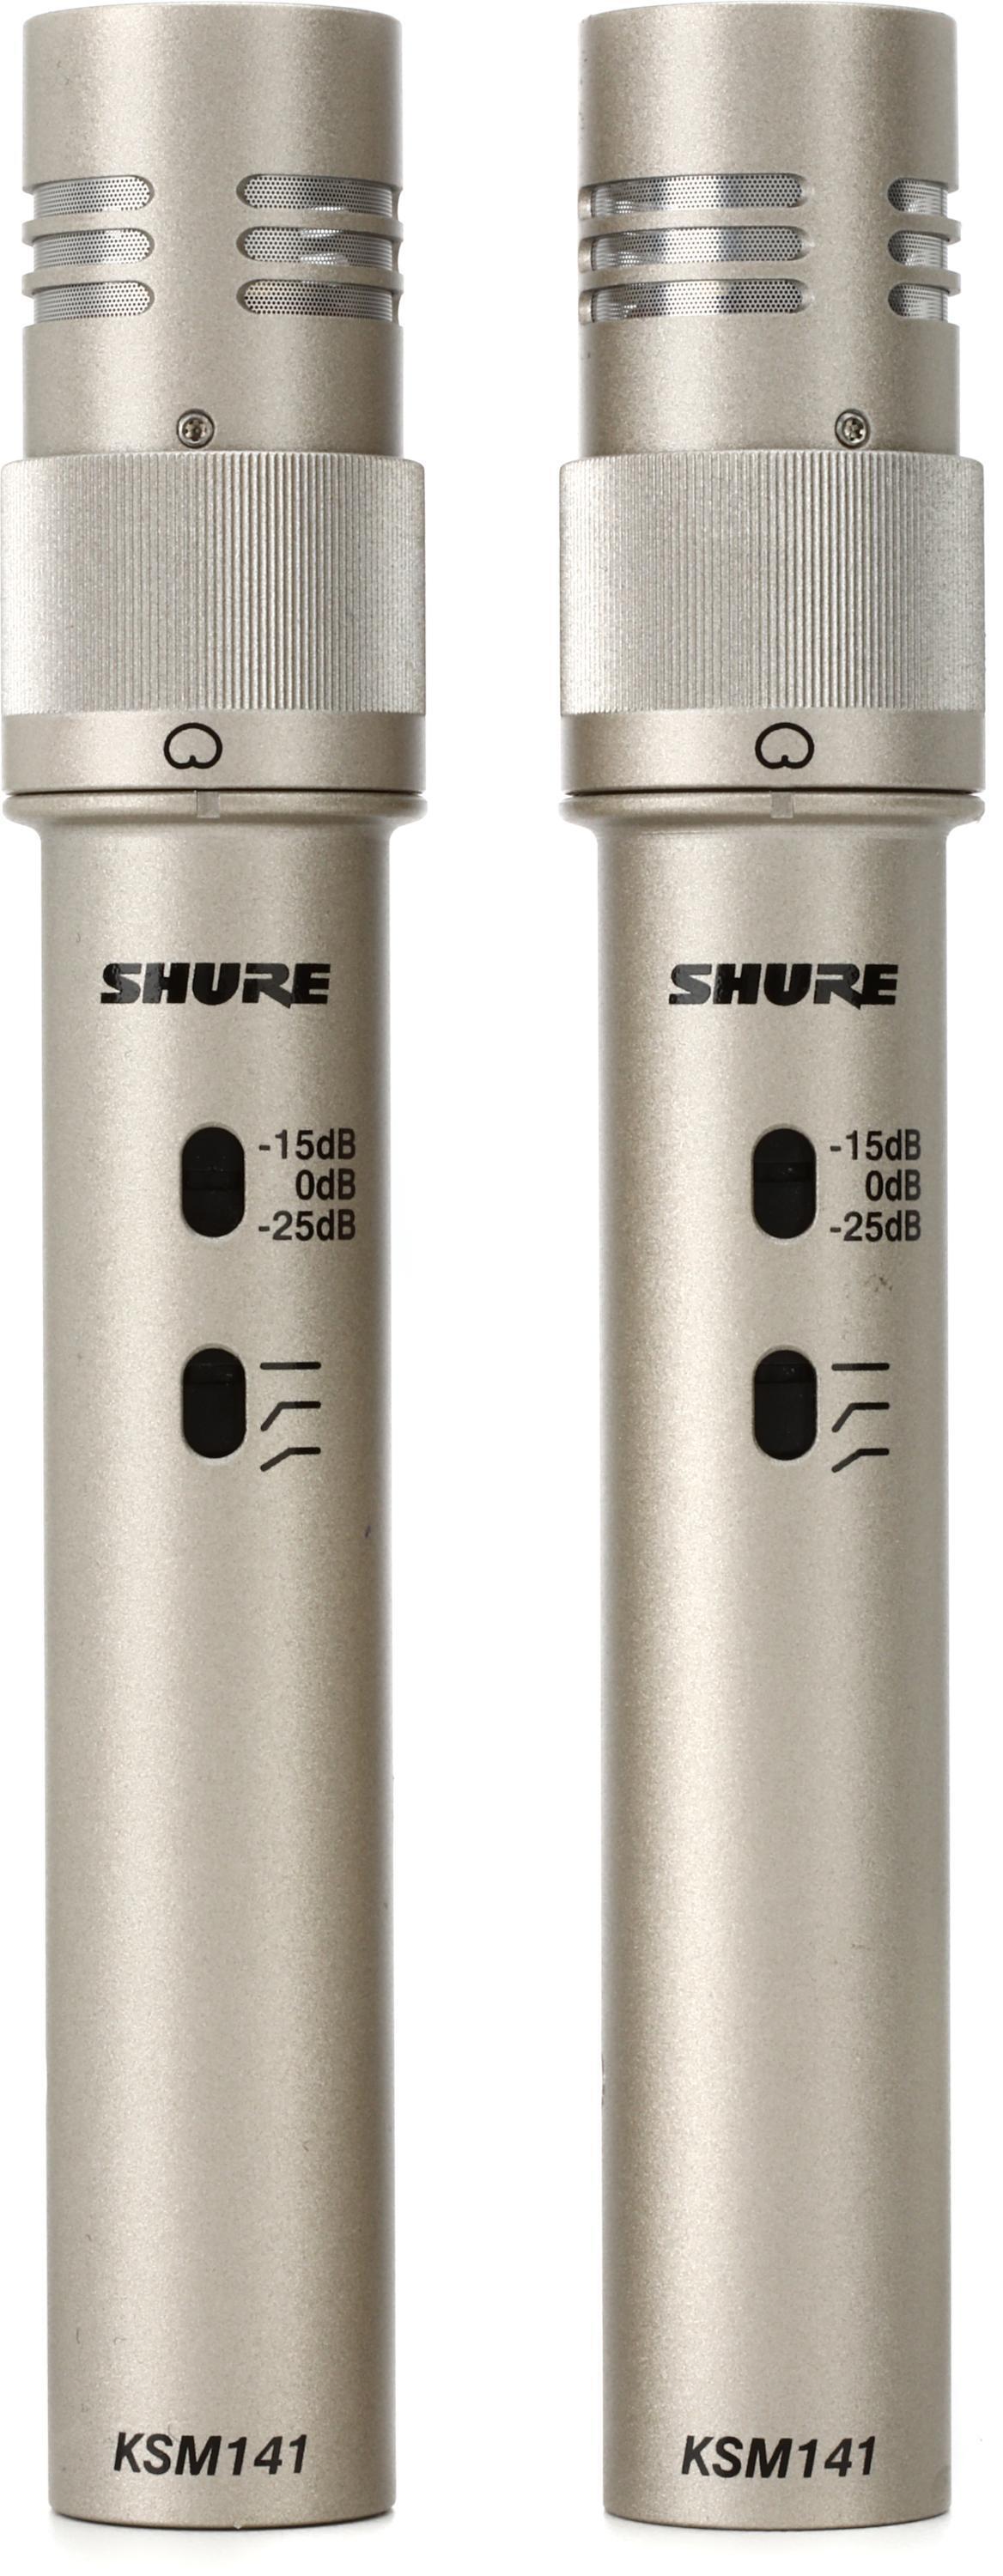 Bundled Item: Shure KSM141 Small-diaphragm Condenser Microphone - Stereo Pair